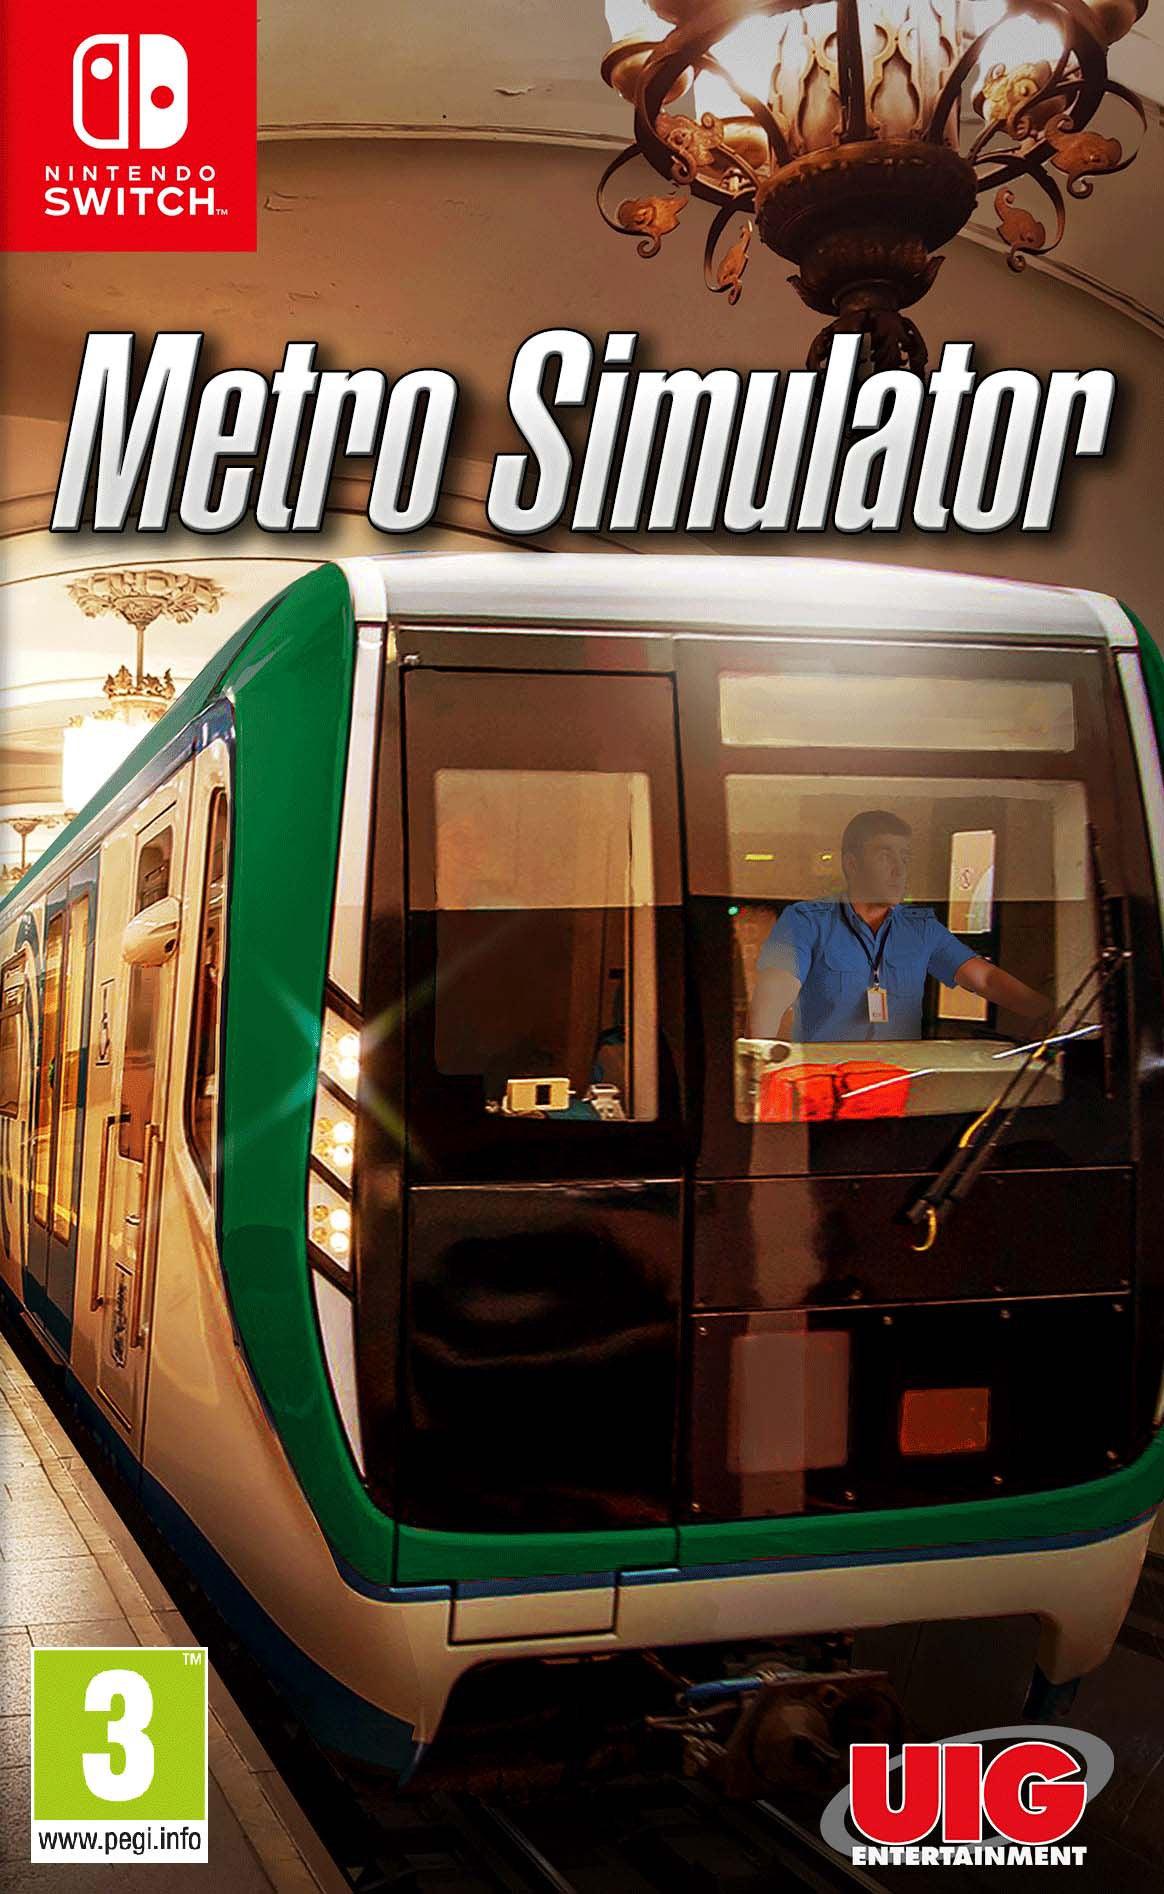 Metro Simulator Cib - Want a New Gadget